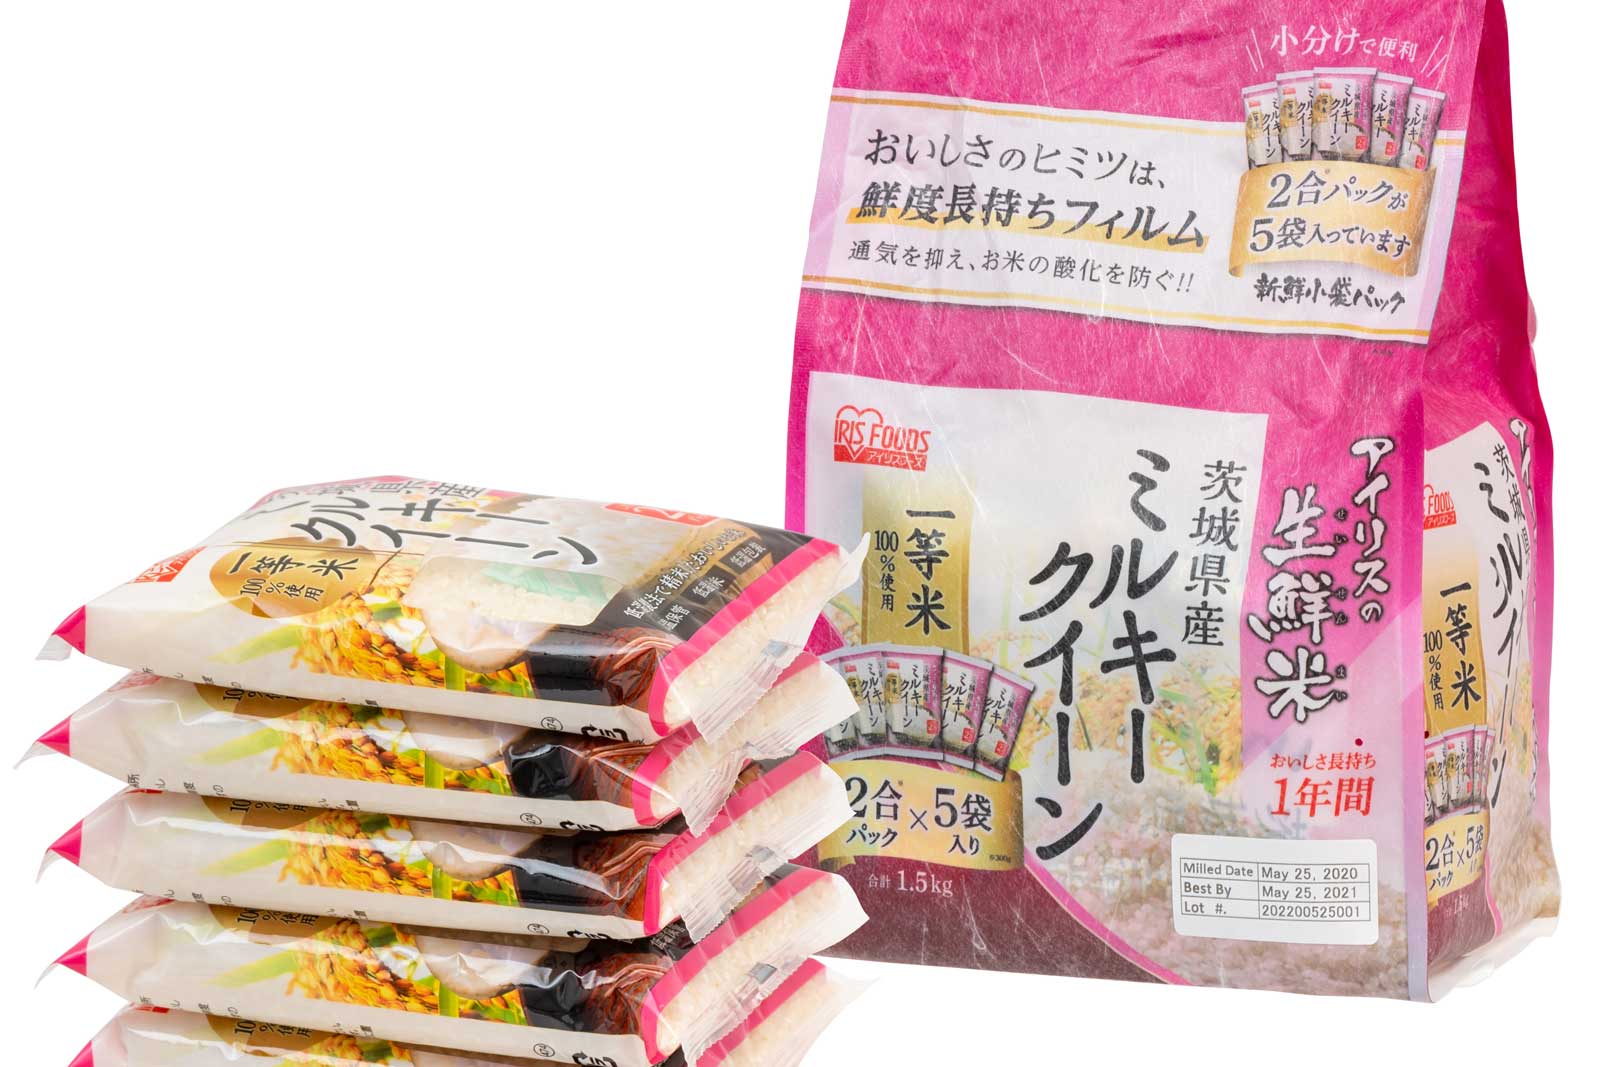 Koshihkari Japanese Rice